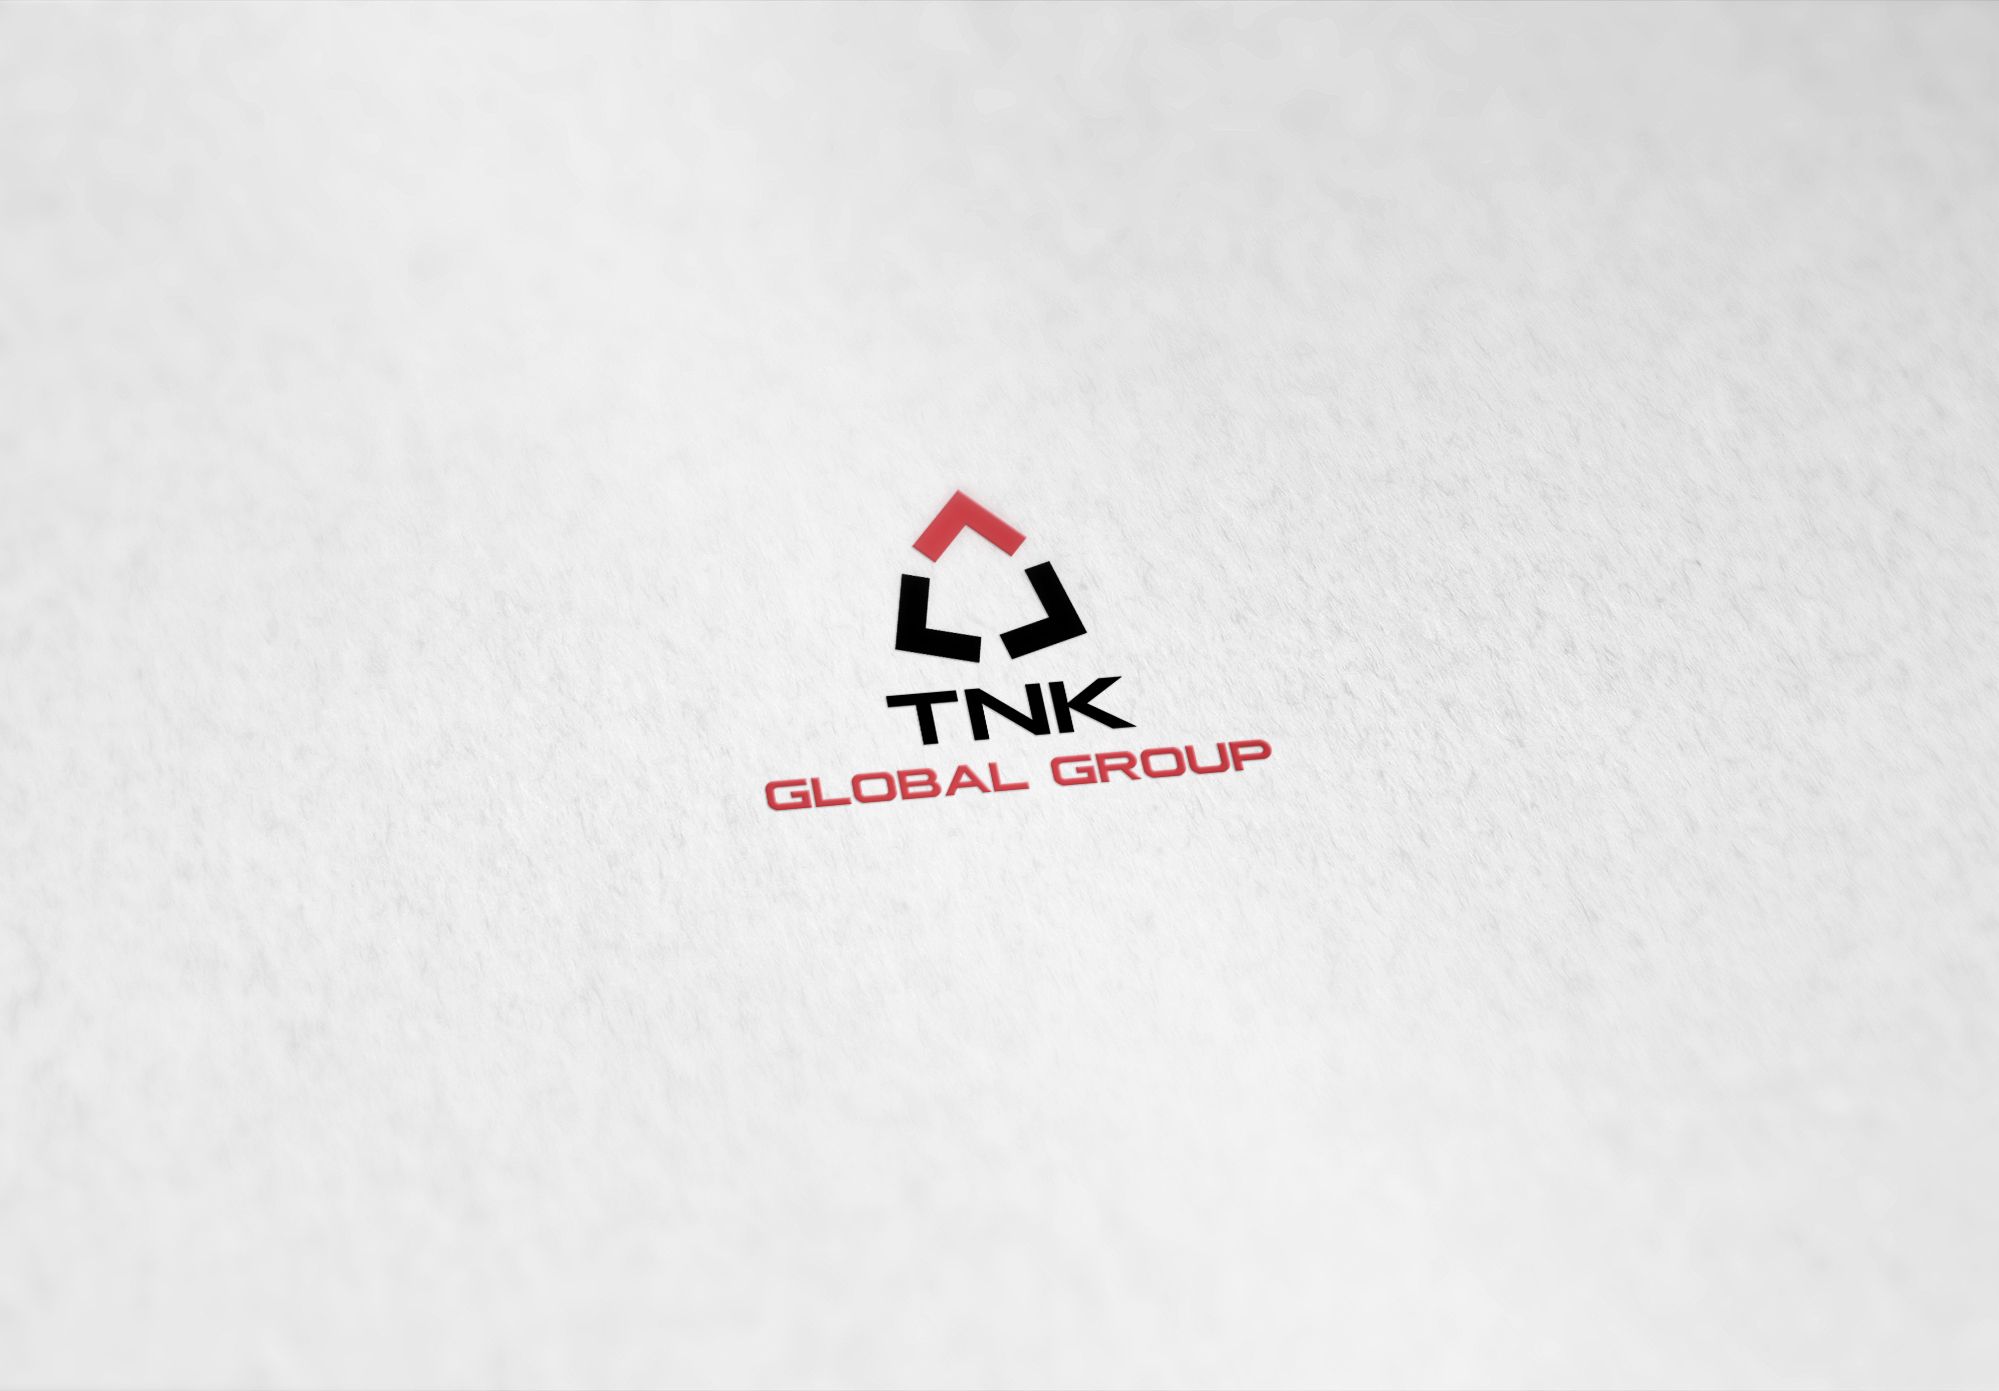 Логотип международной компании - TNK GLOBAL GROUP - дизайнер U4po4mak